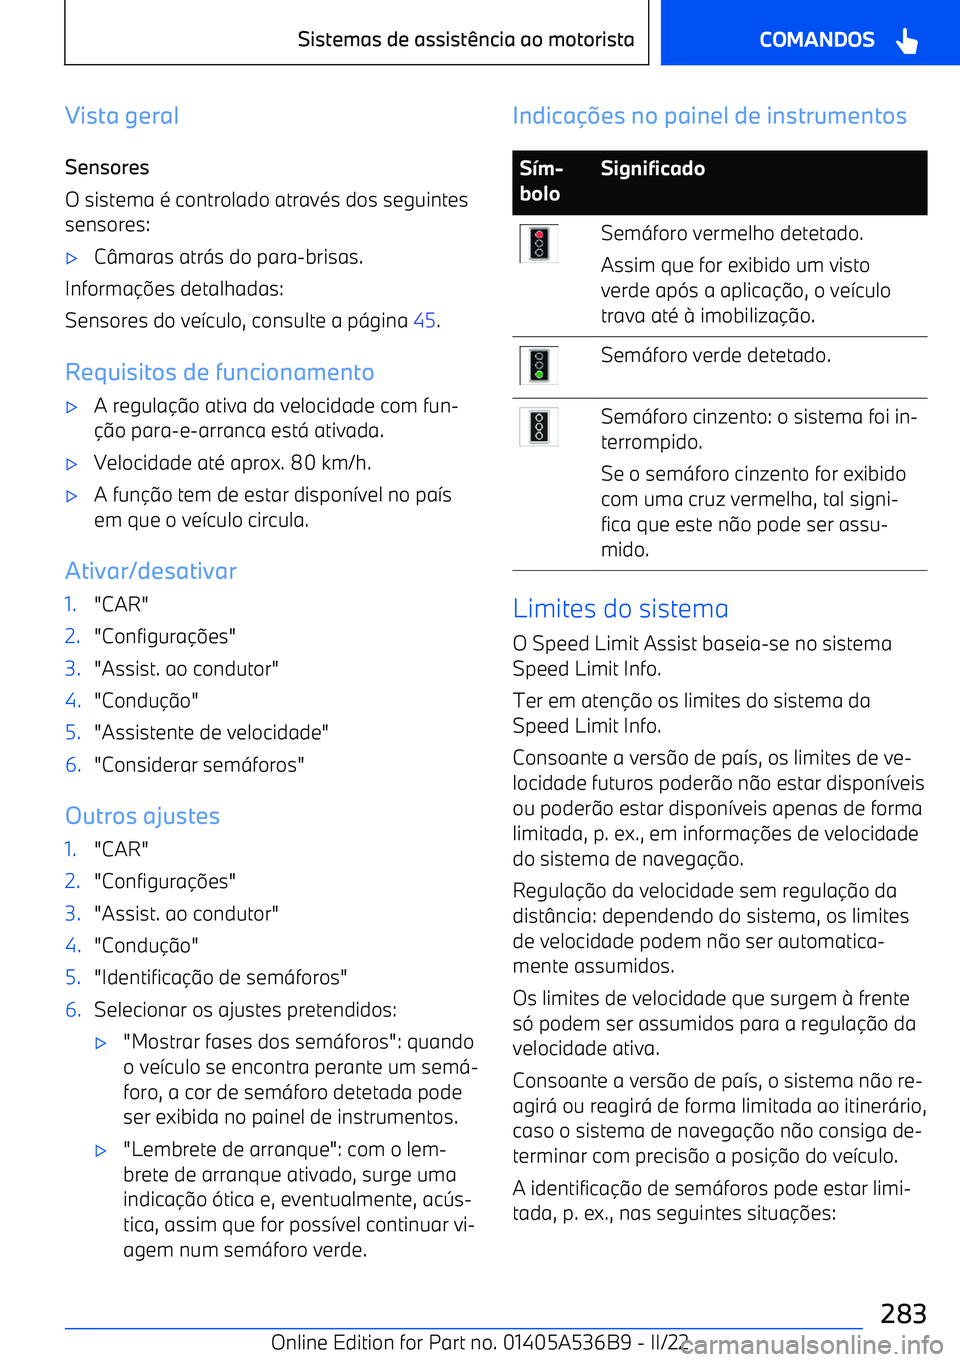 BMW X6 M 2022  Manual do condutor (in Portuguese) Vista geral
Sensores
O sistema 